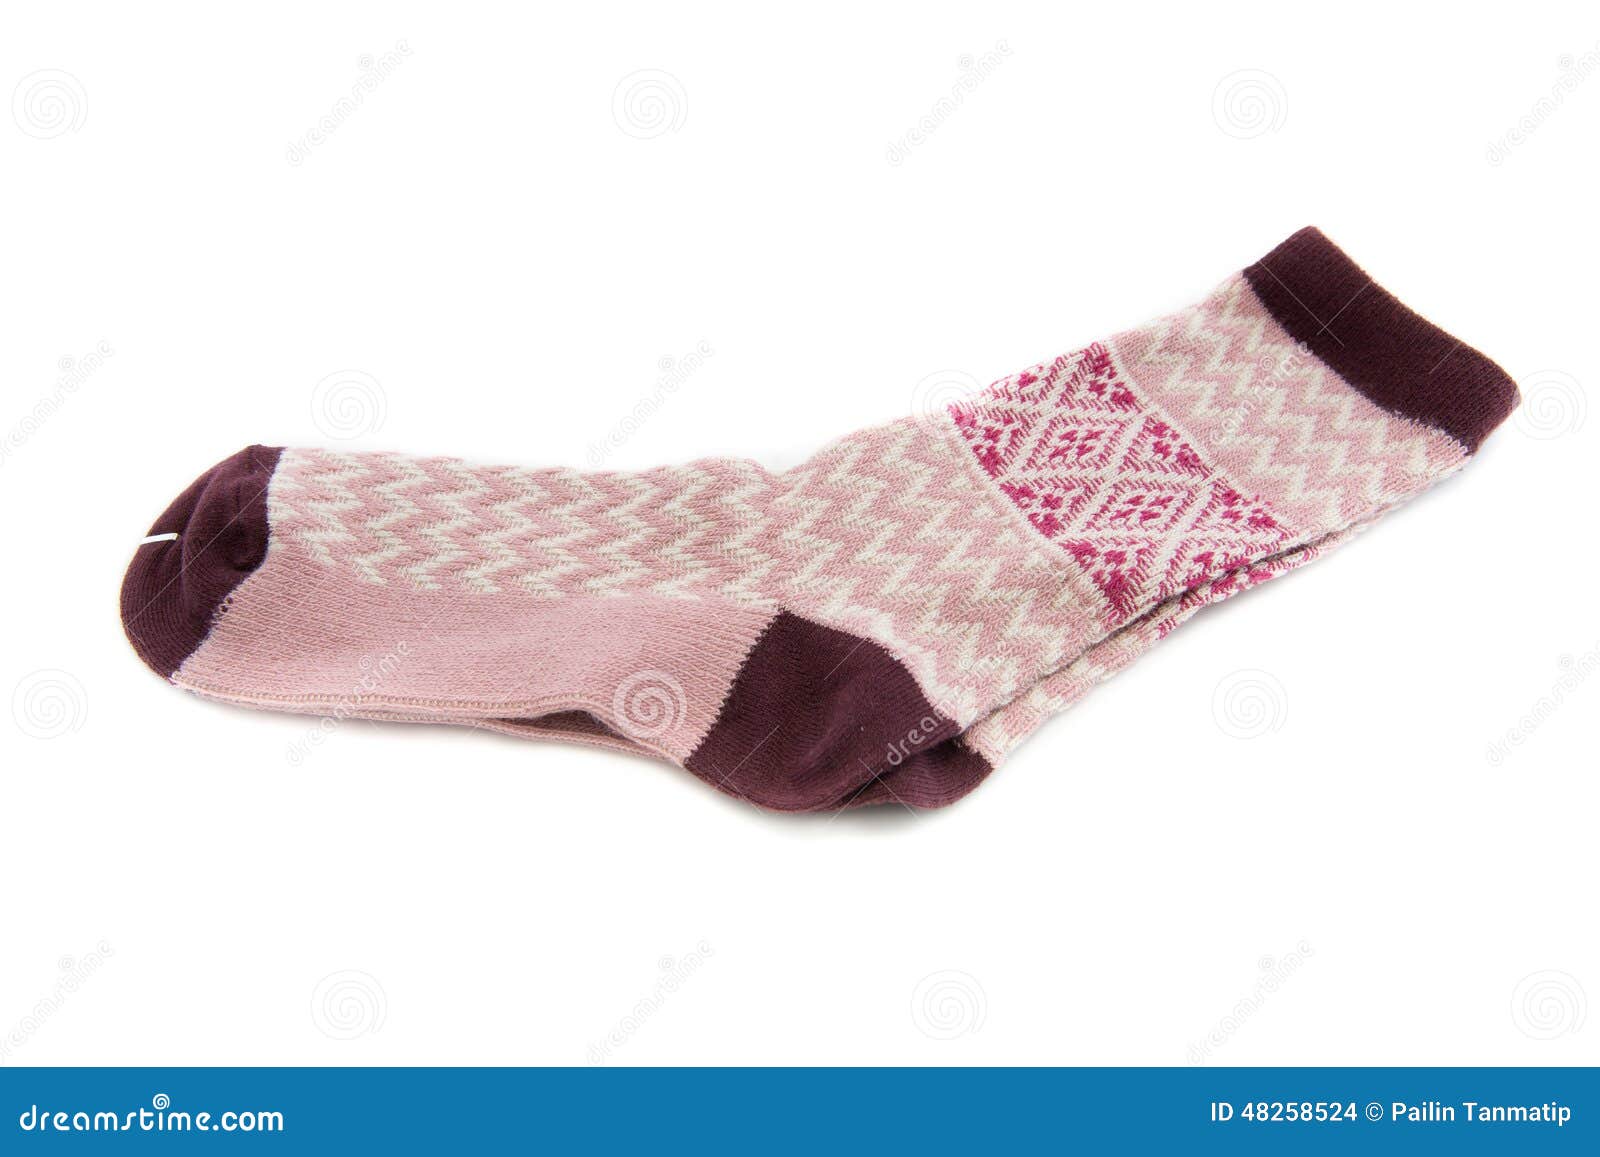 Socks stock photo. Image of garment, stylish, pair, decoration - 48258524